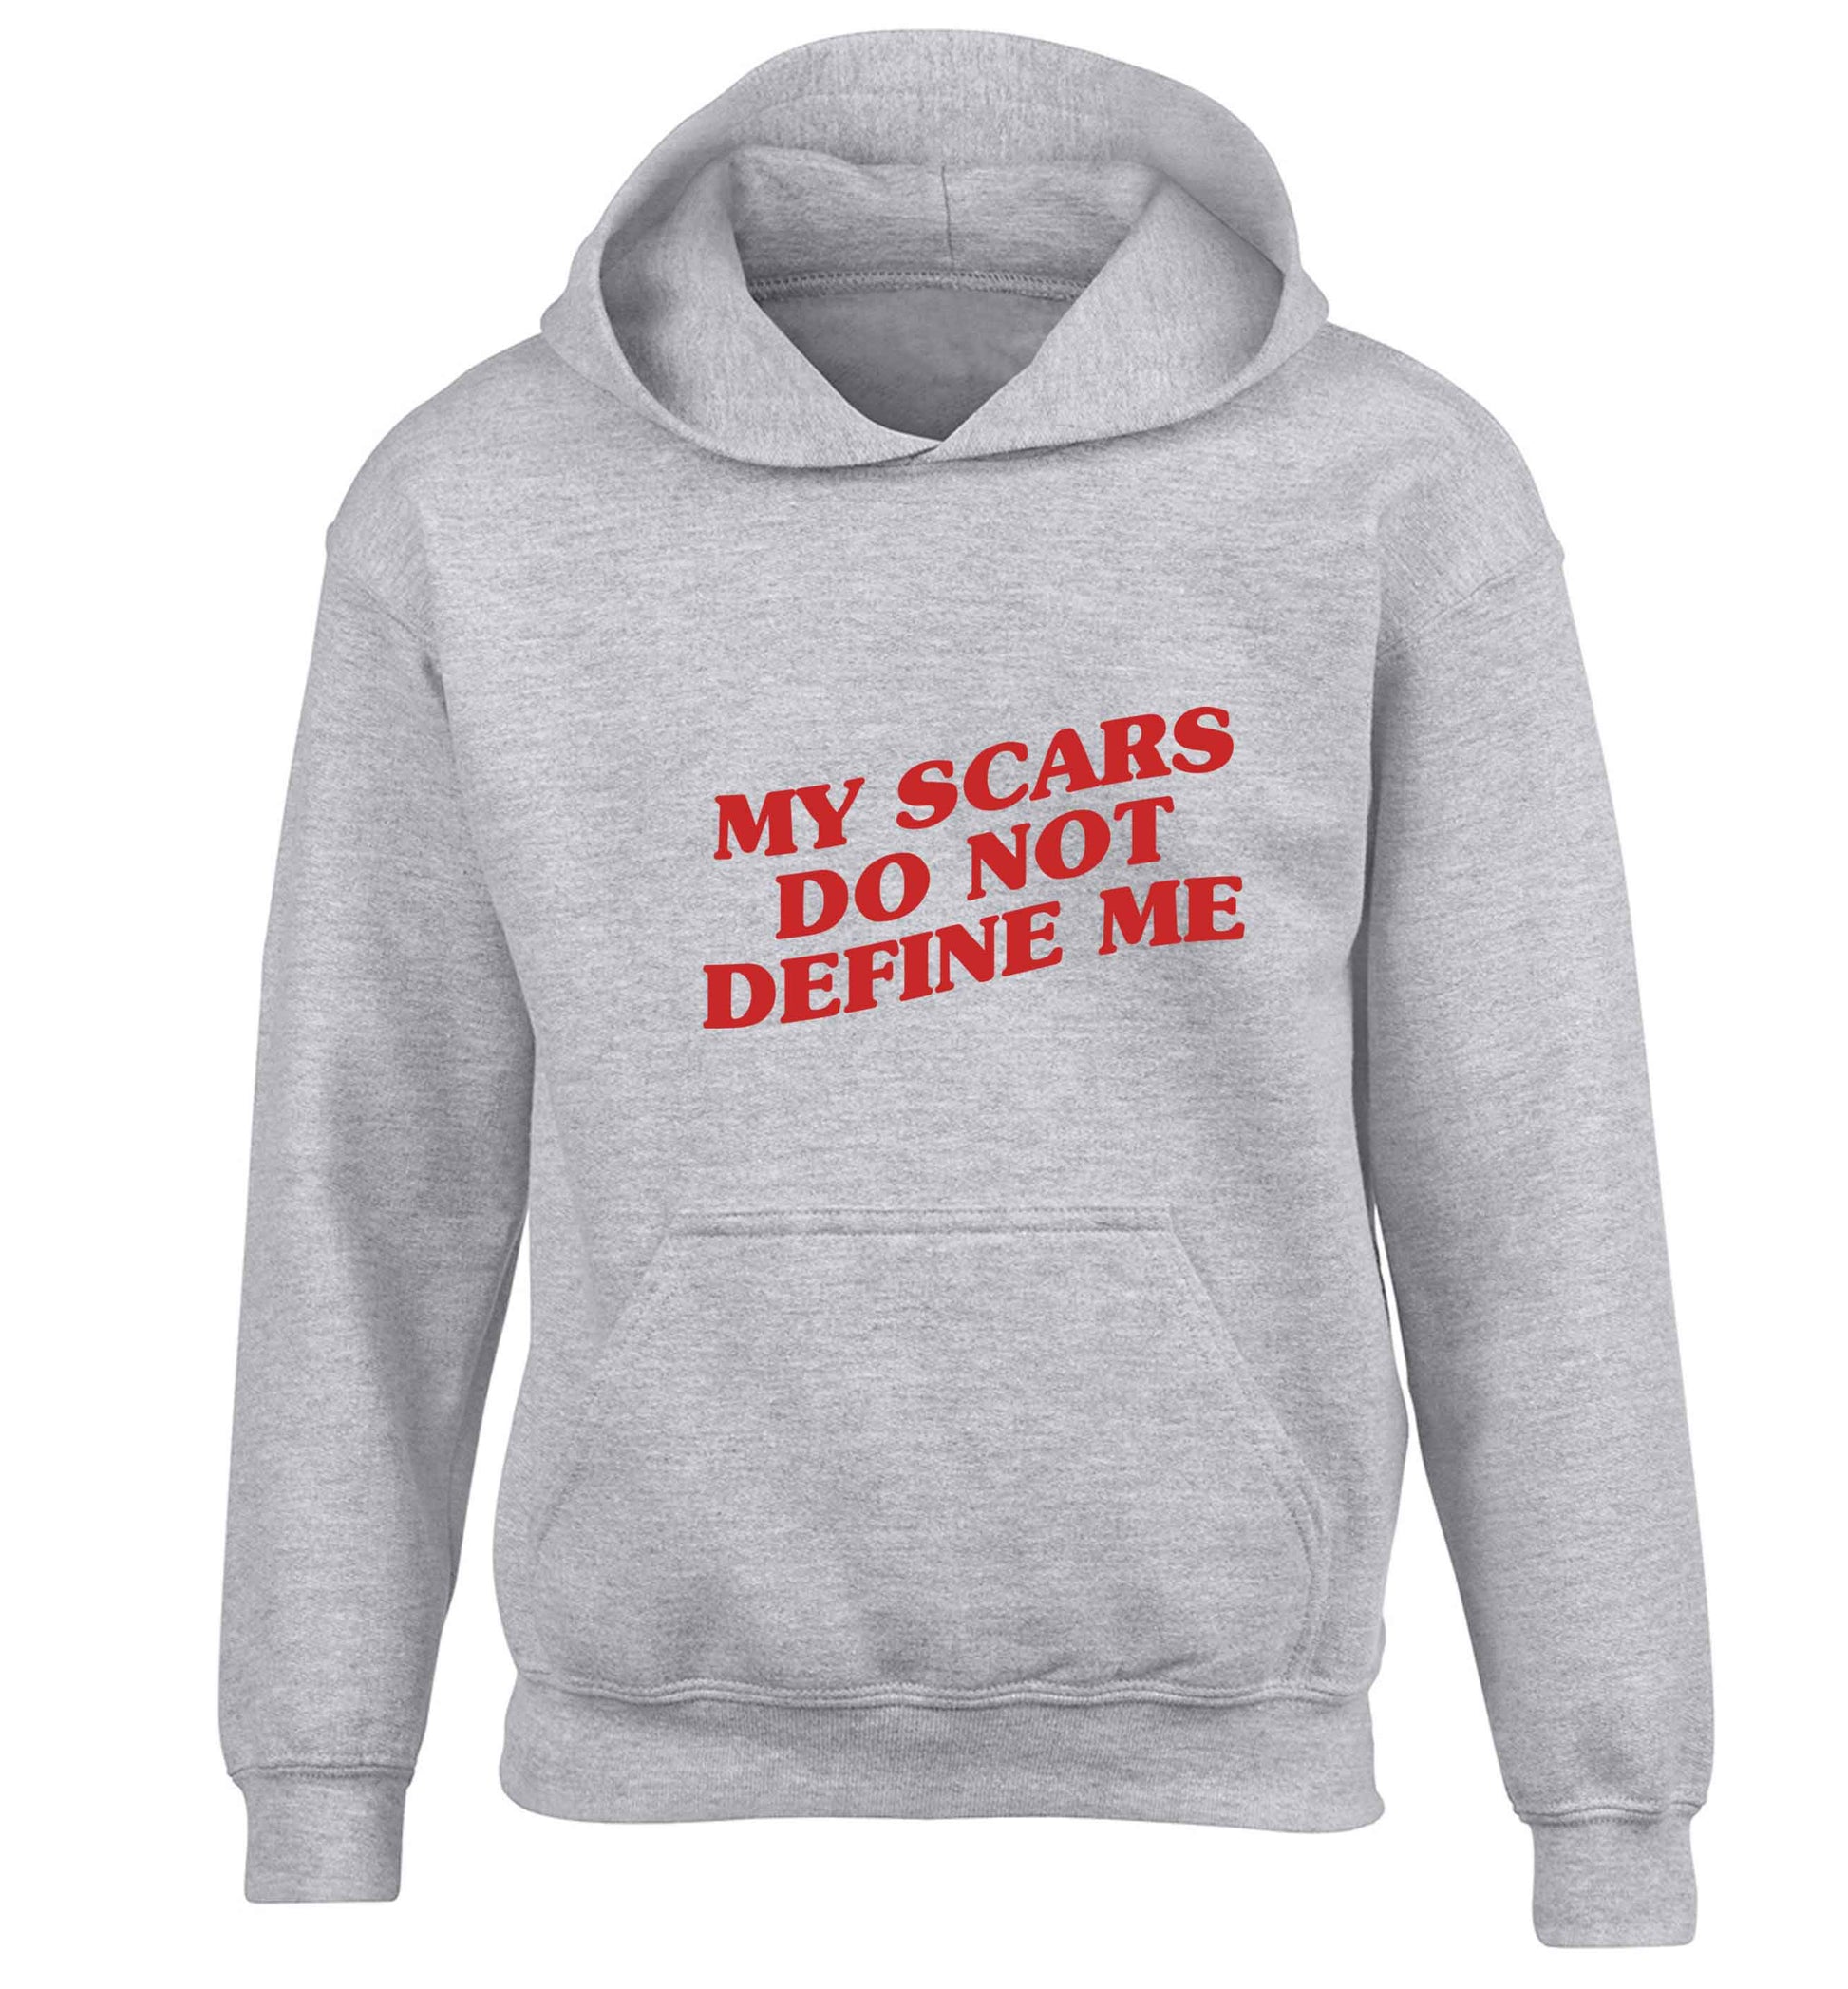 My scars do not define me children's grey hoodie 12-13 Years